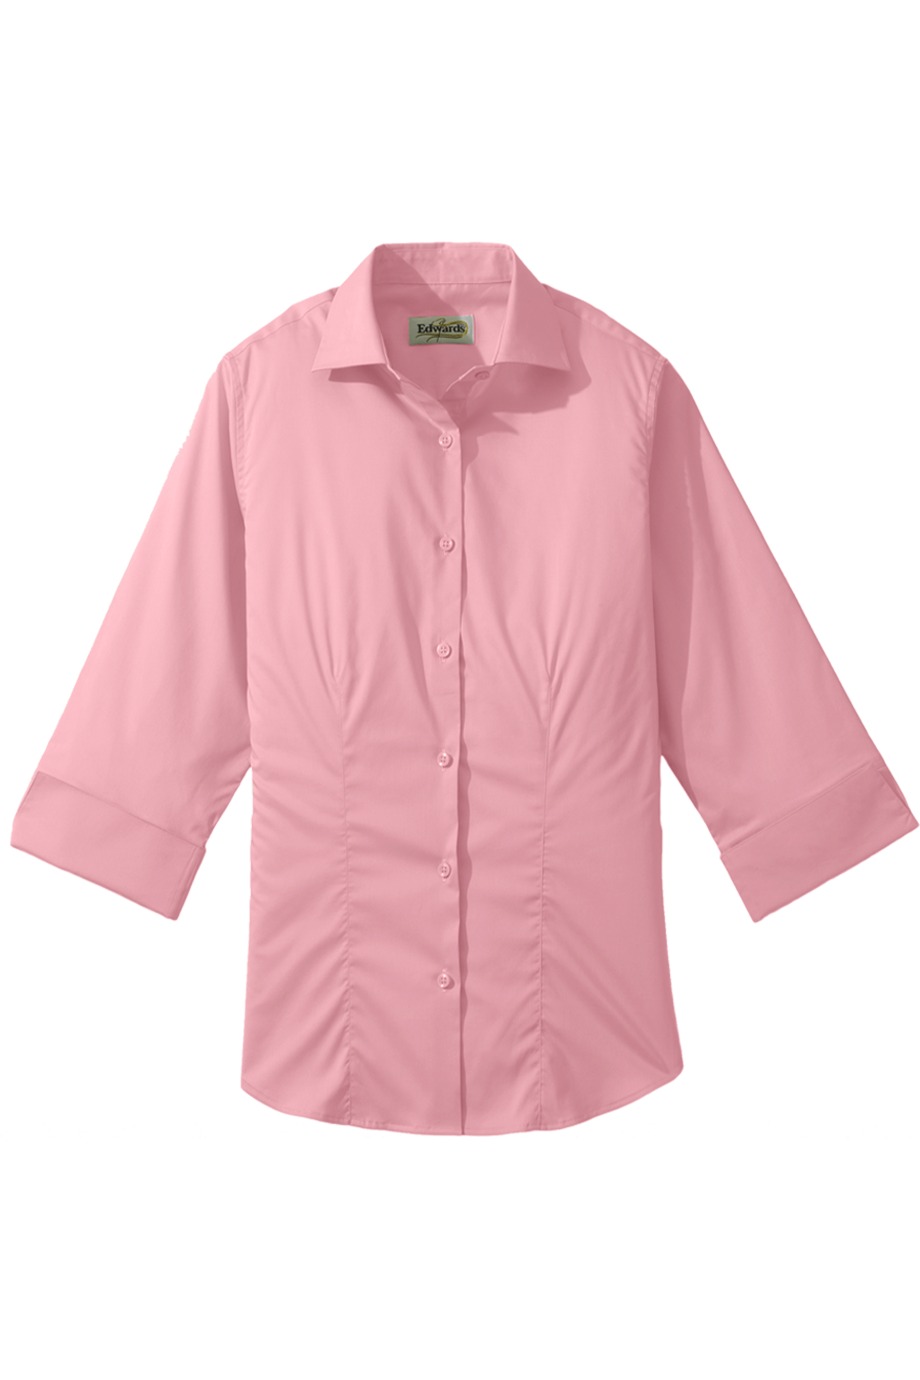 Edwards Garment 5033 - Women's Tailored Three Quarter Stretch Blouse